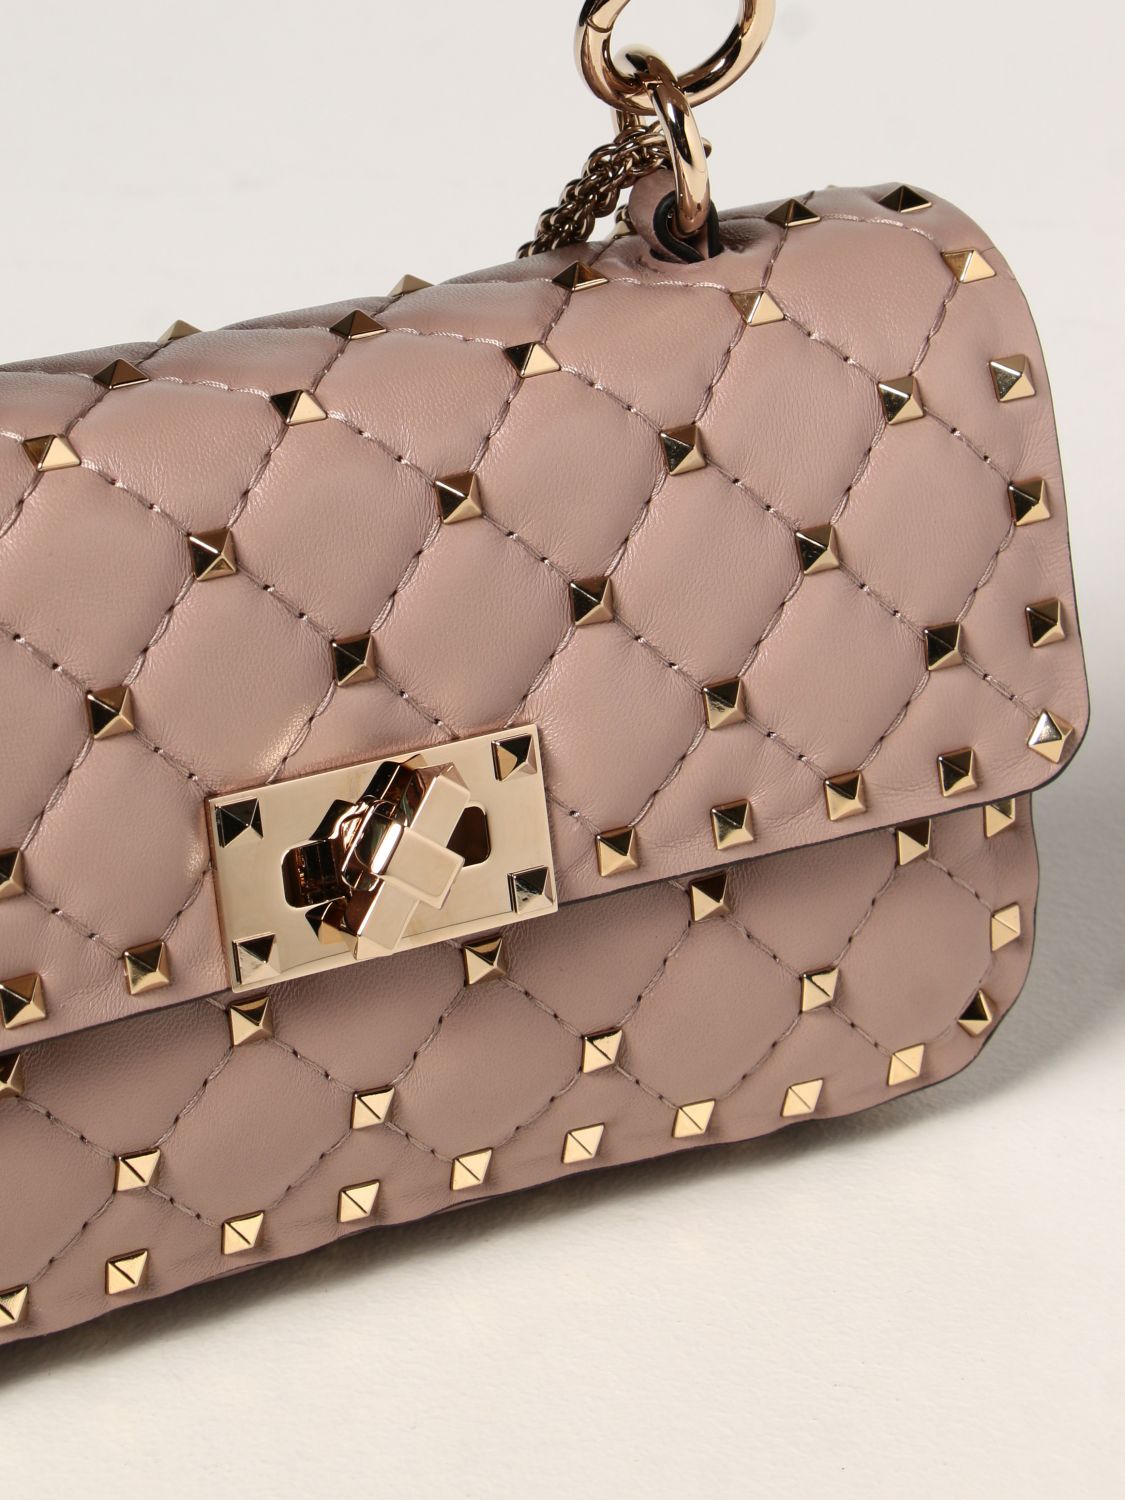 VALENTINO GARAVANI: Rockstud Spike bag in nappa leather - Blush Pink ...